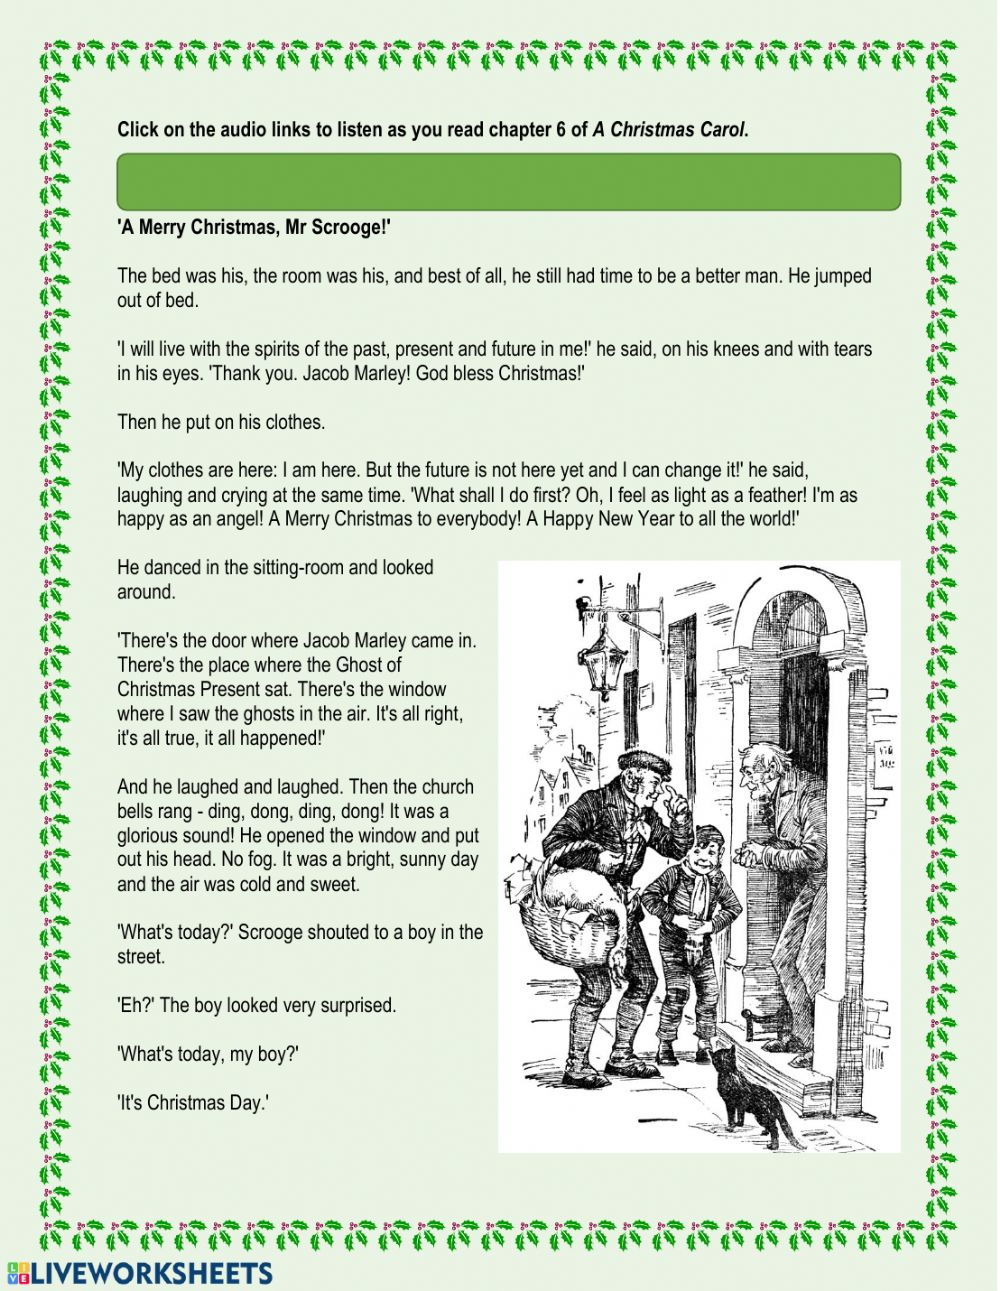 A Christmas Carol - Chapter 6 Worksheet